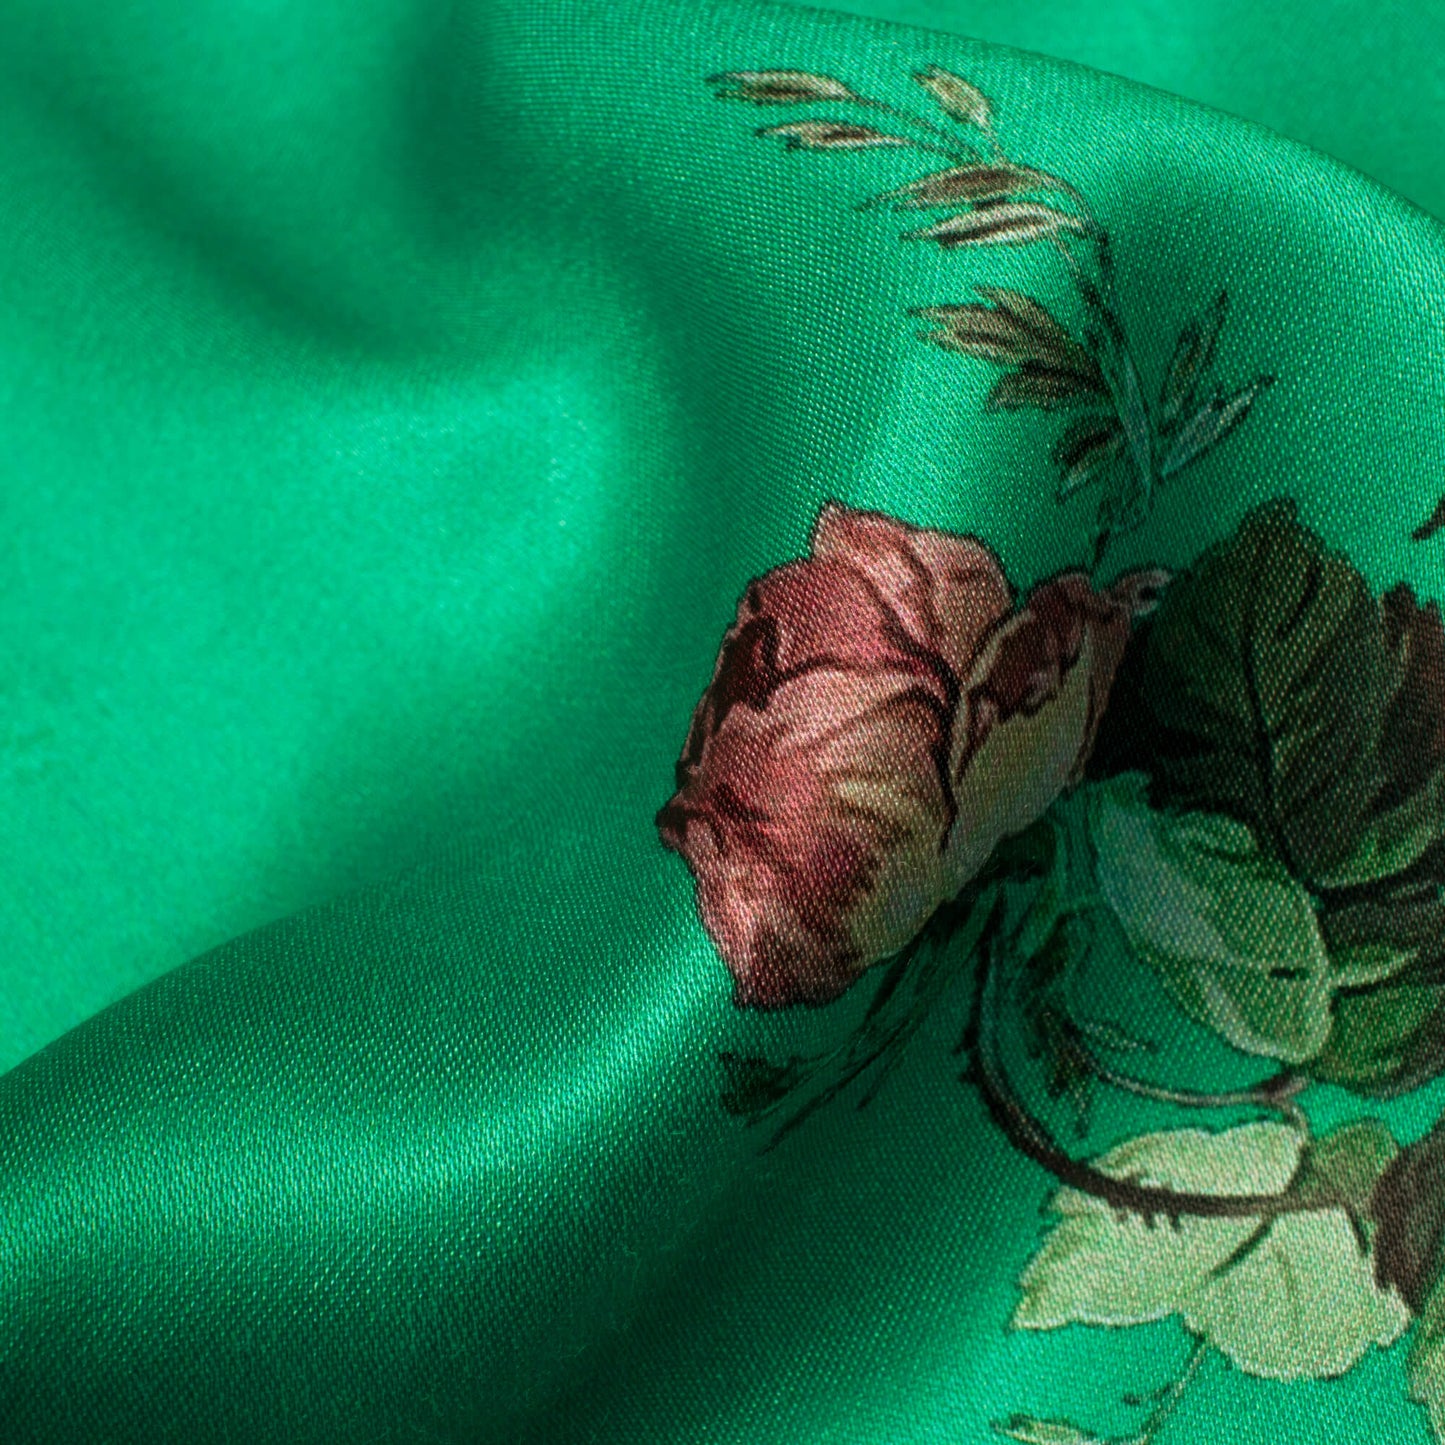 Jade Green And Rosewood Pink Floral Pattern Digital Print Premium Lush Satin Fabric